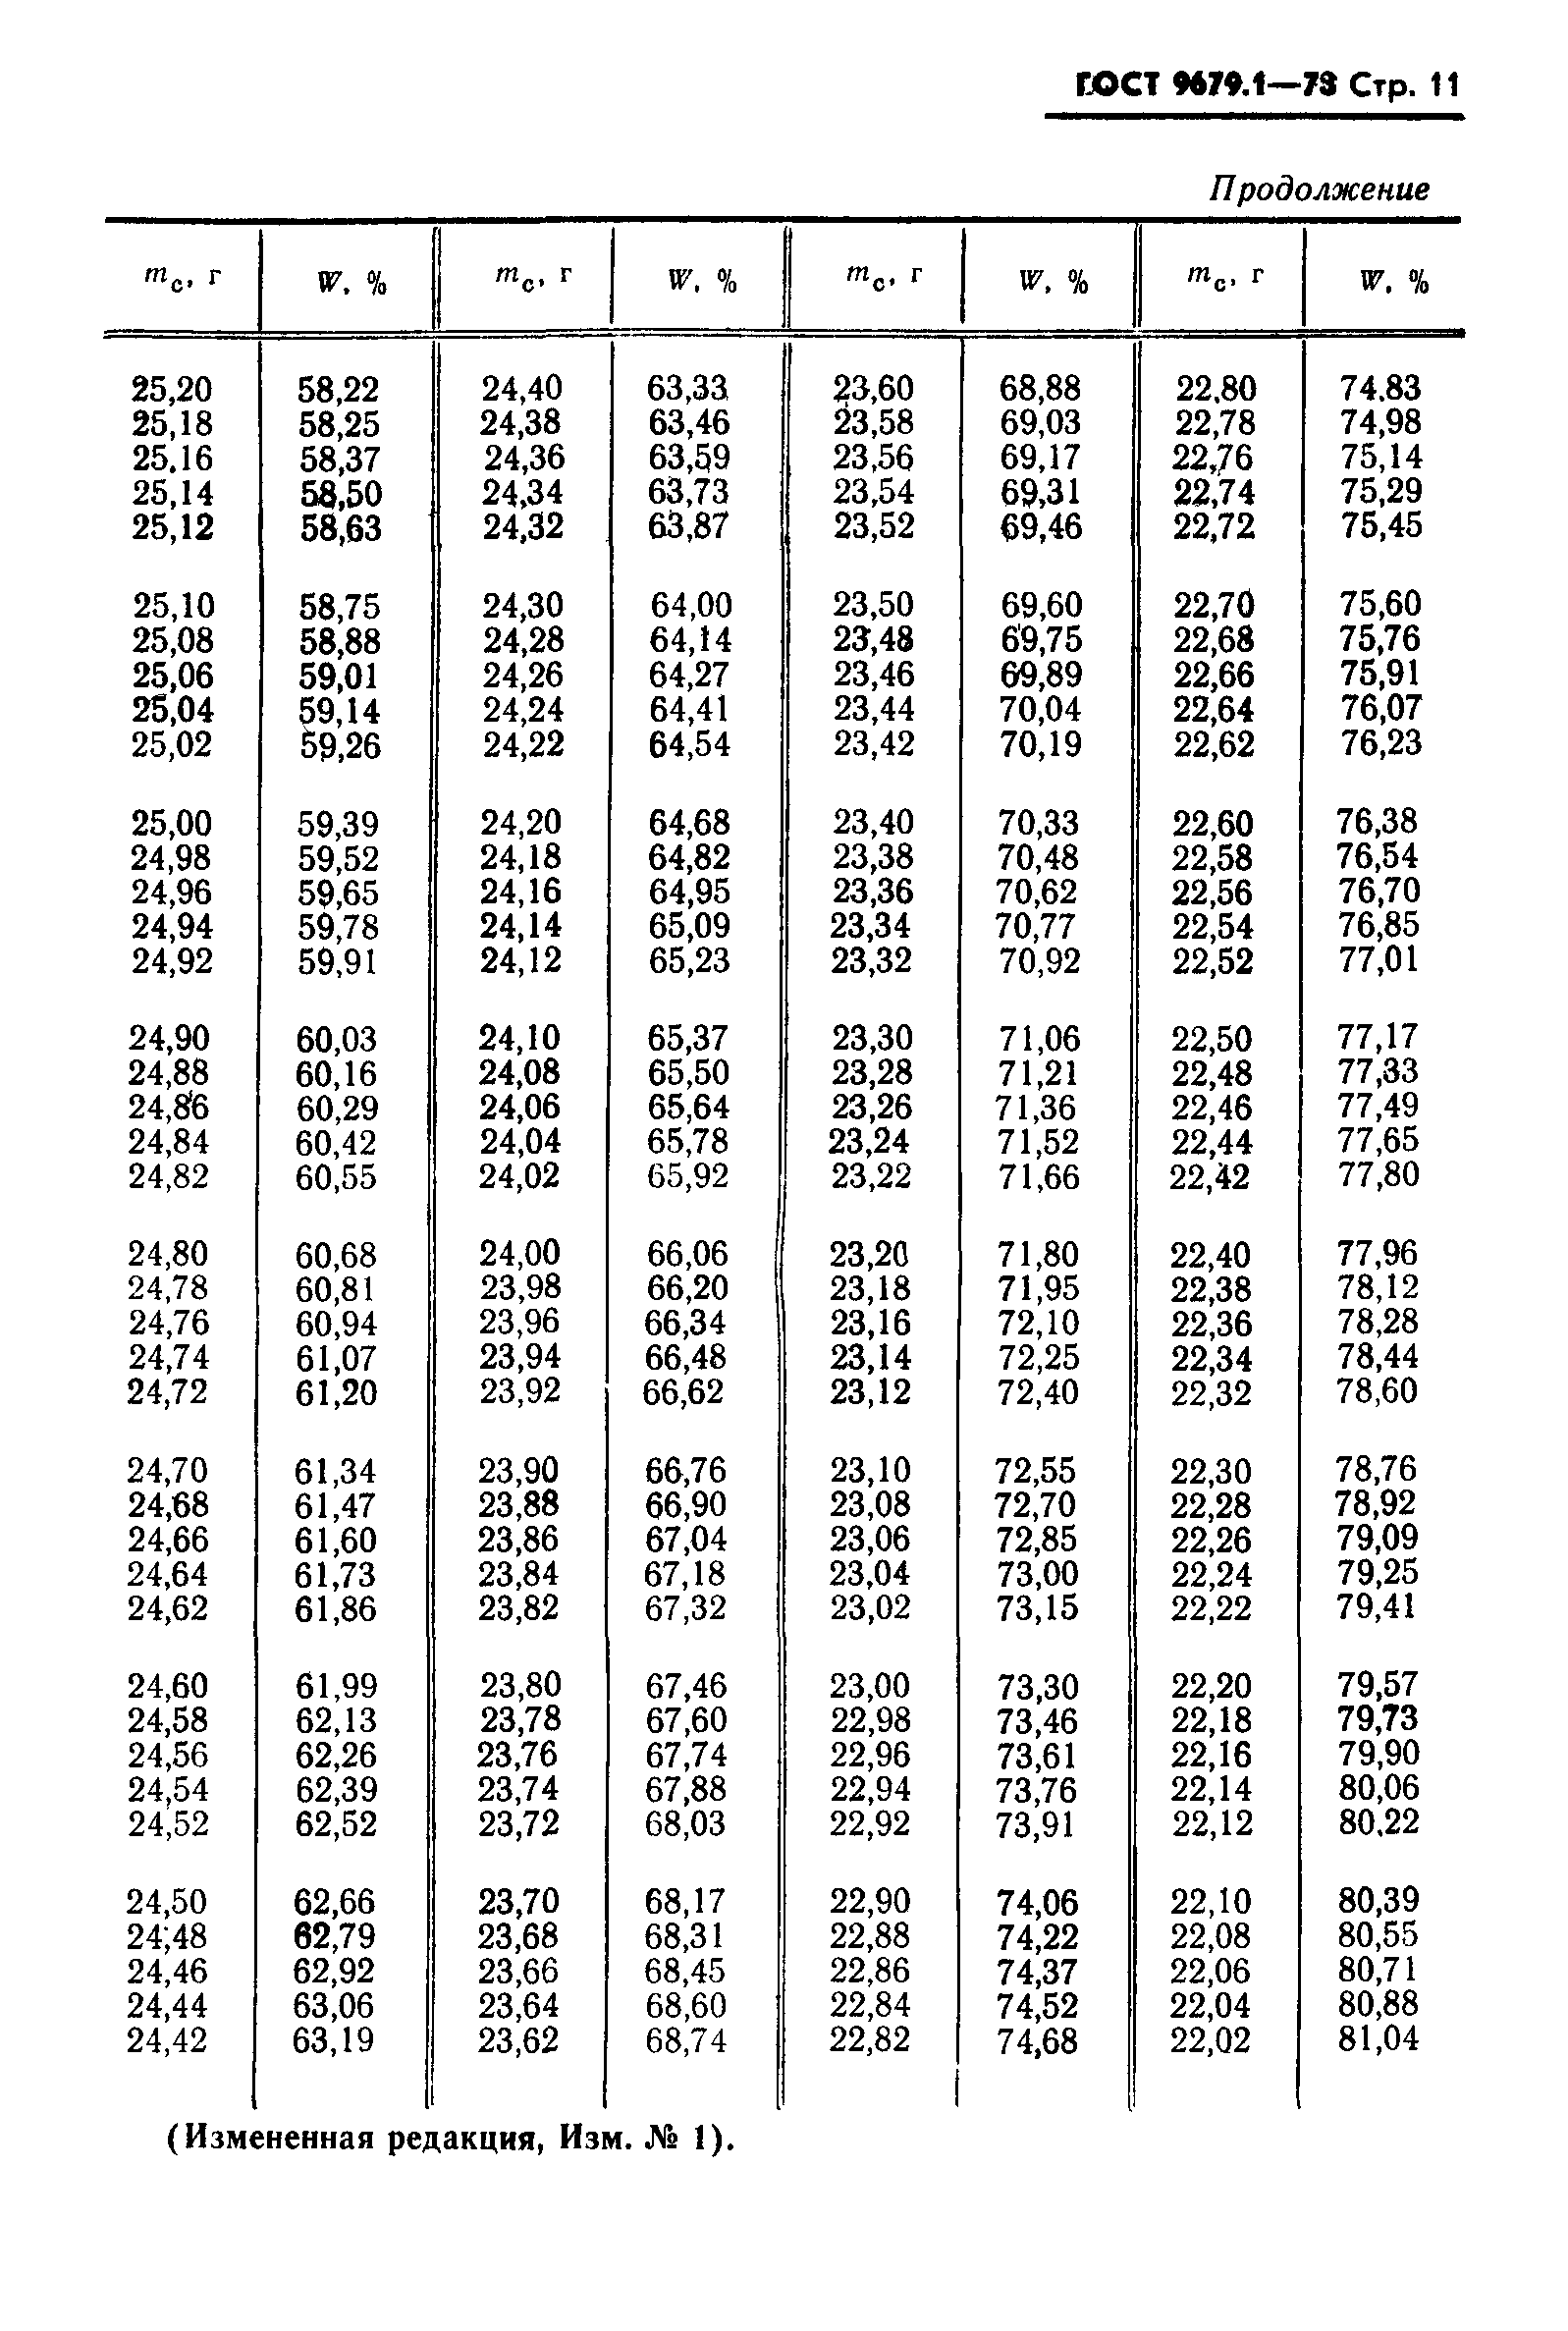 ГОСТ 9679.1-78